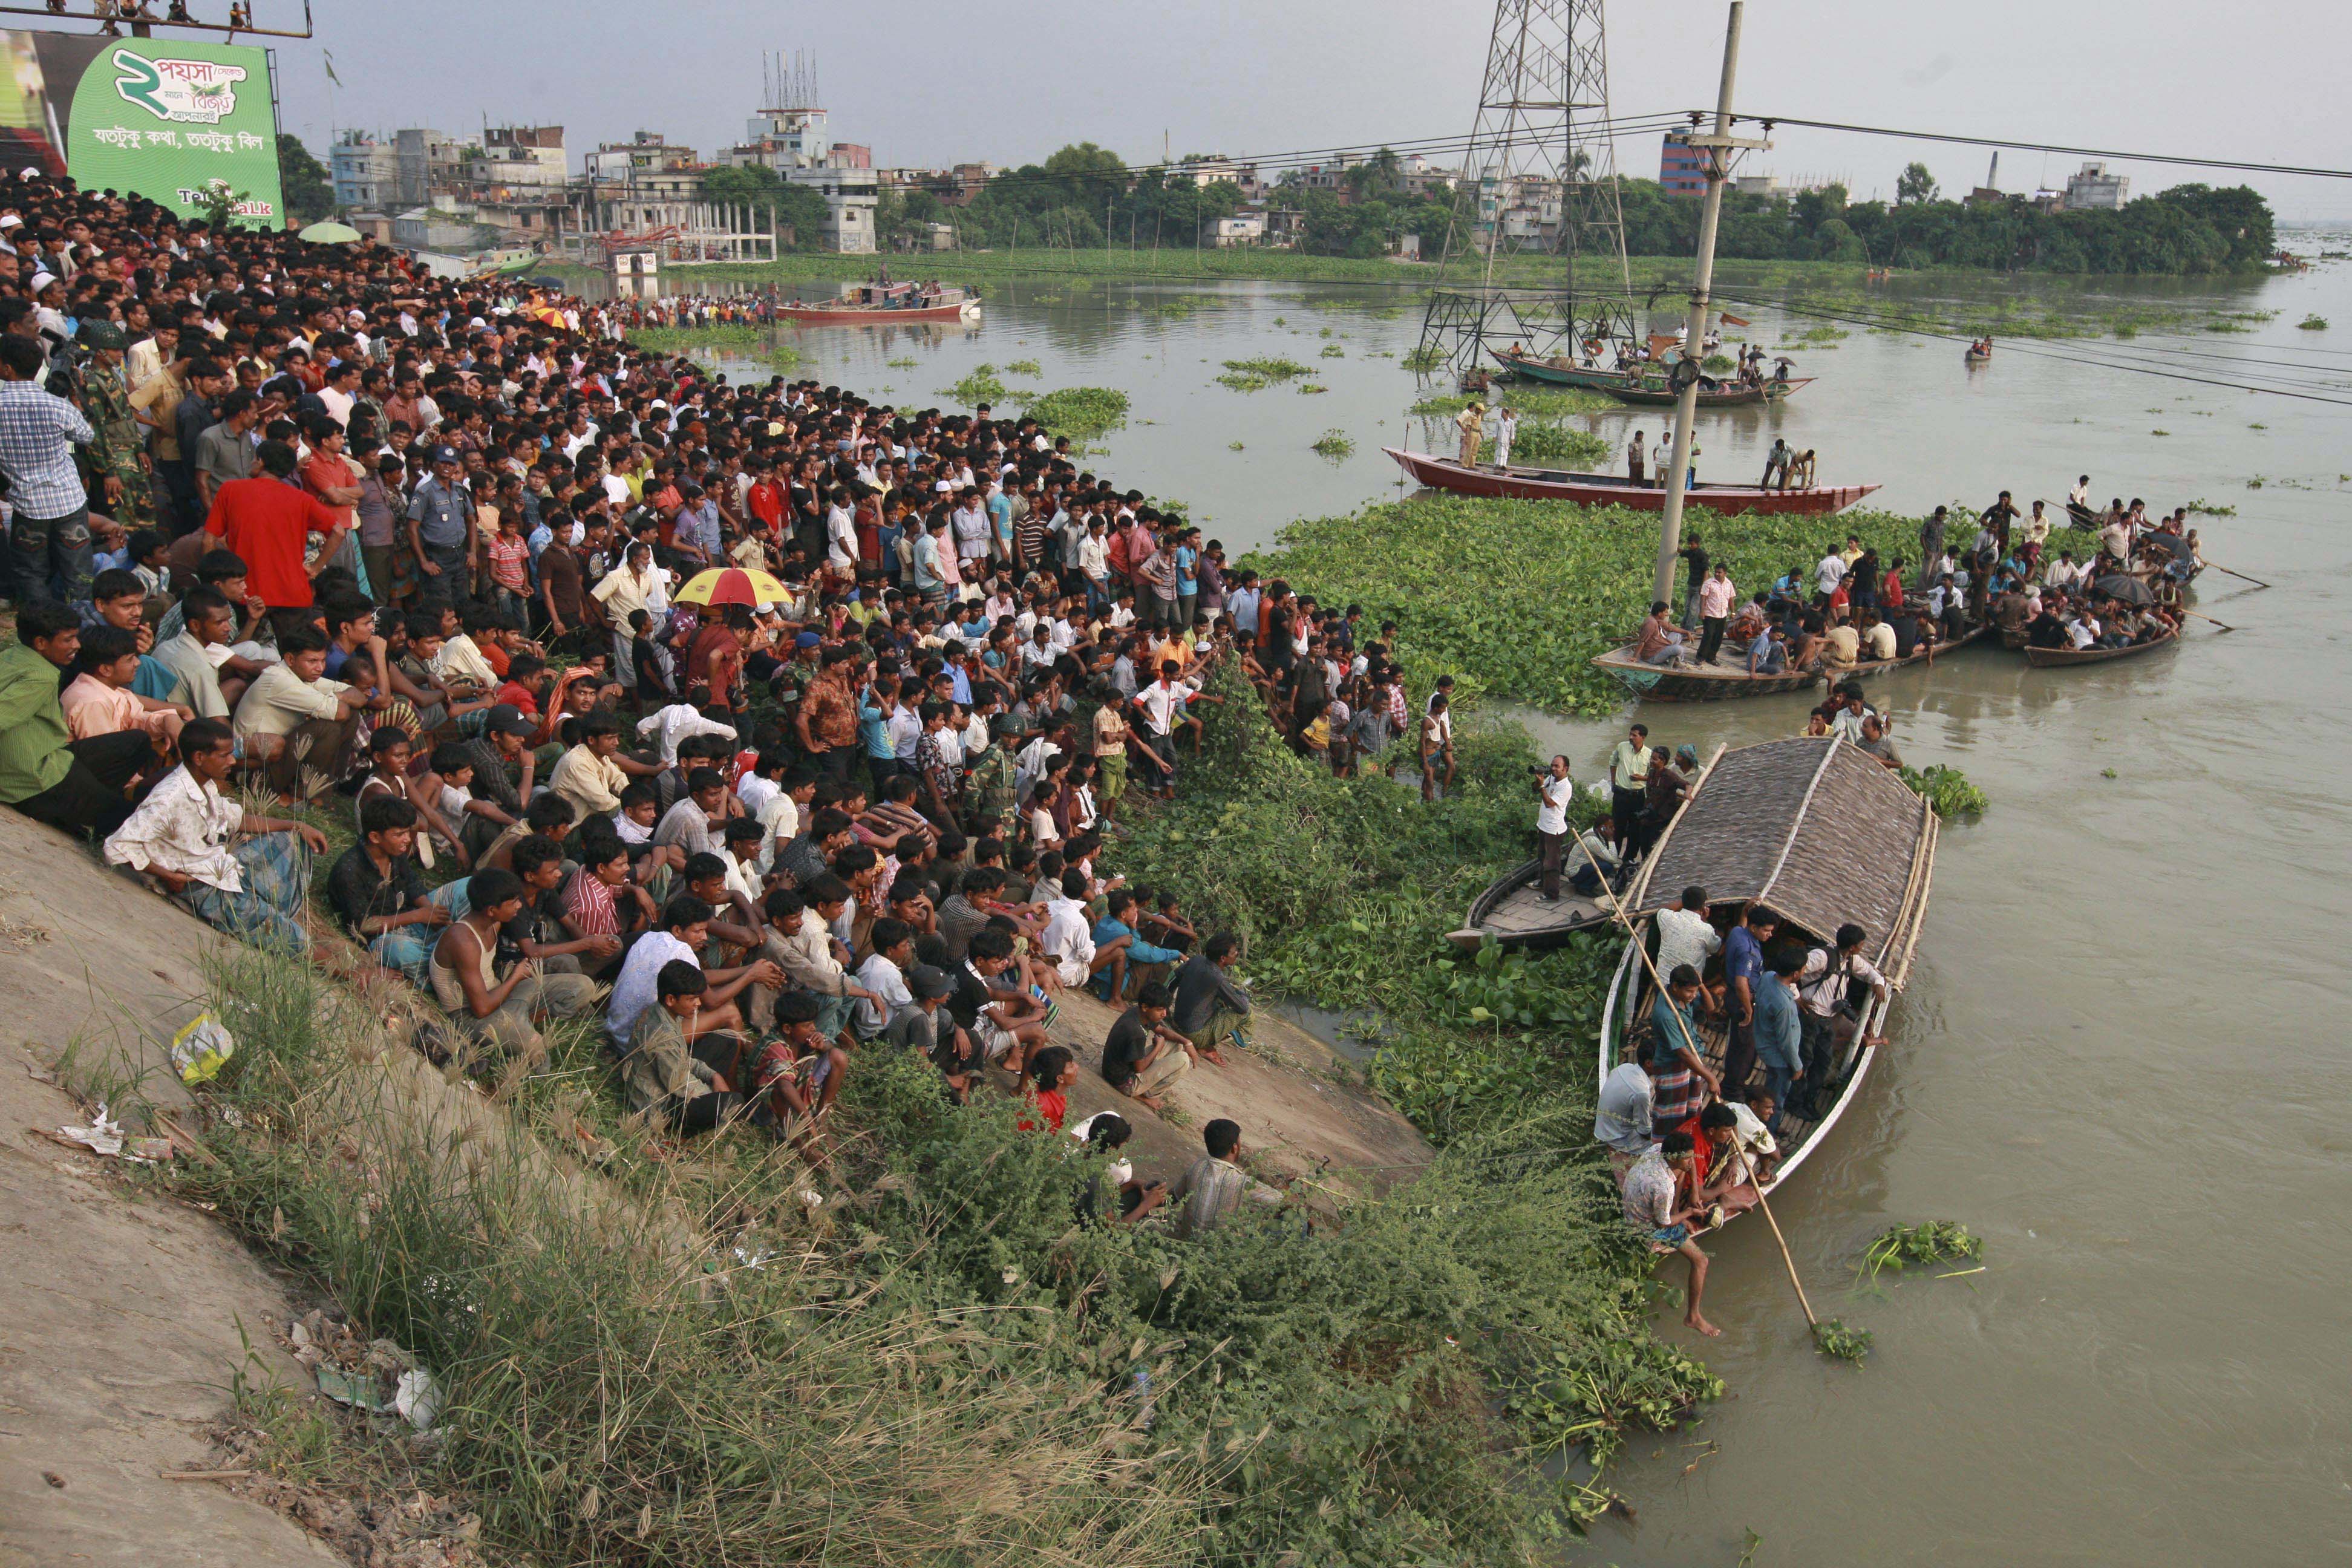 regn, Flod, Vatten, Buss, Olycka, Bangladesh